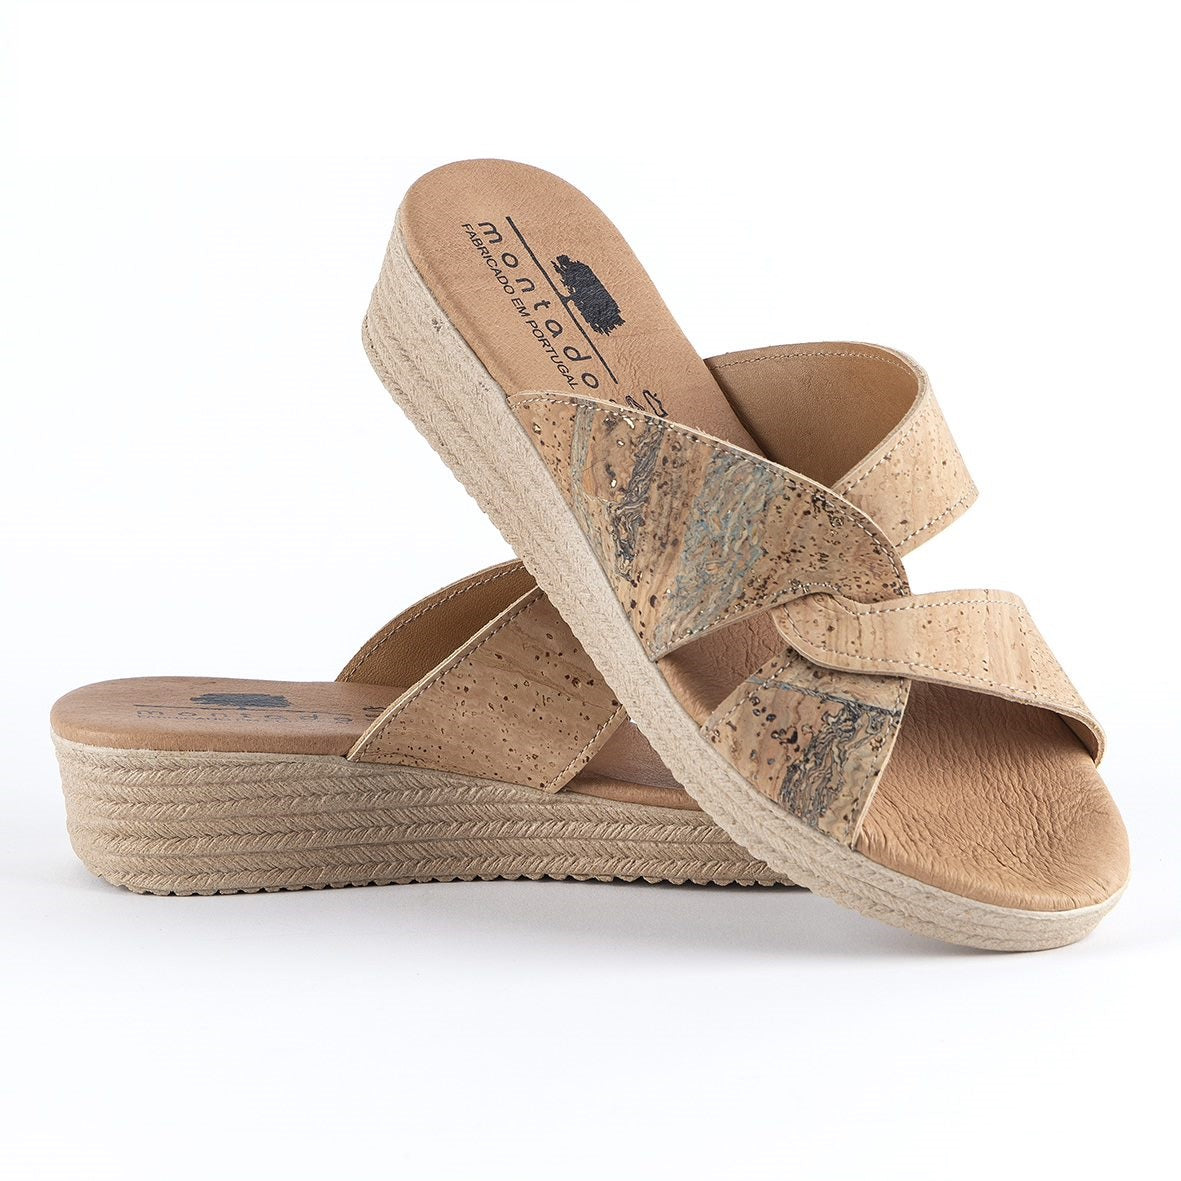 Original Cork Sandals | Ethical Vegan Natural Cork Sandals | HowCork | Cork  sandals, Sandals, Outdoor wear